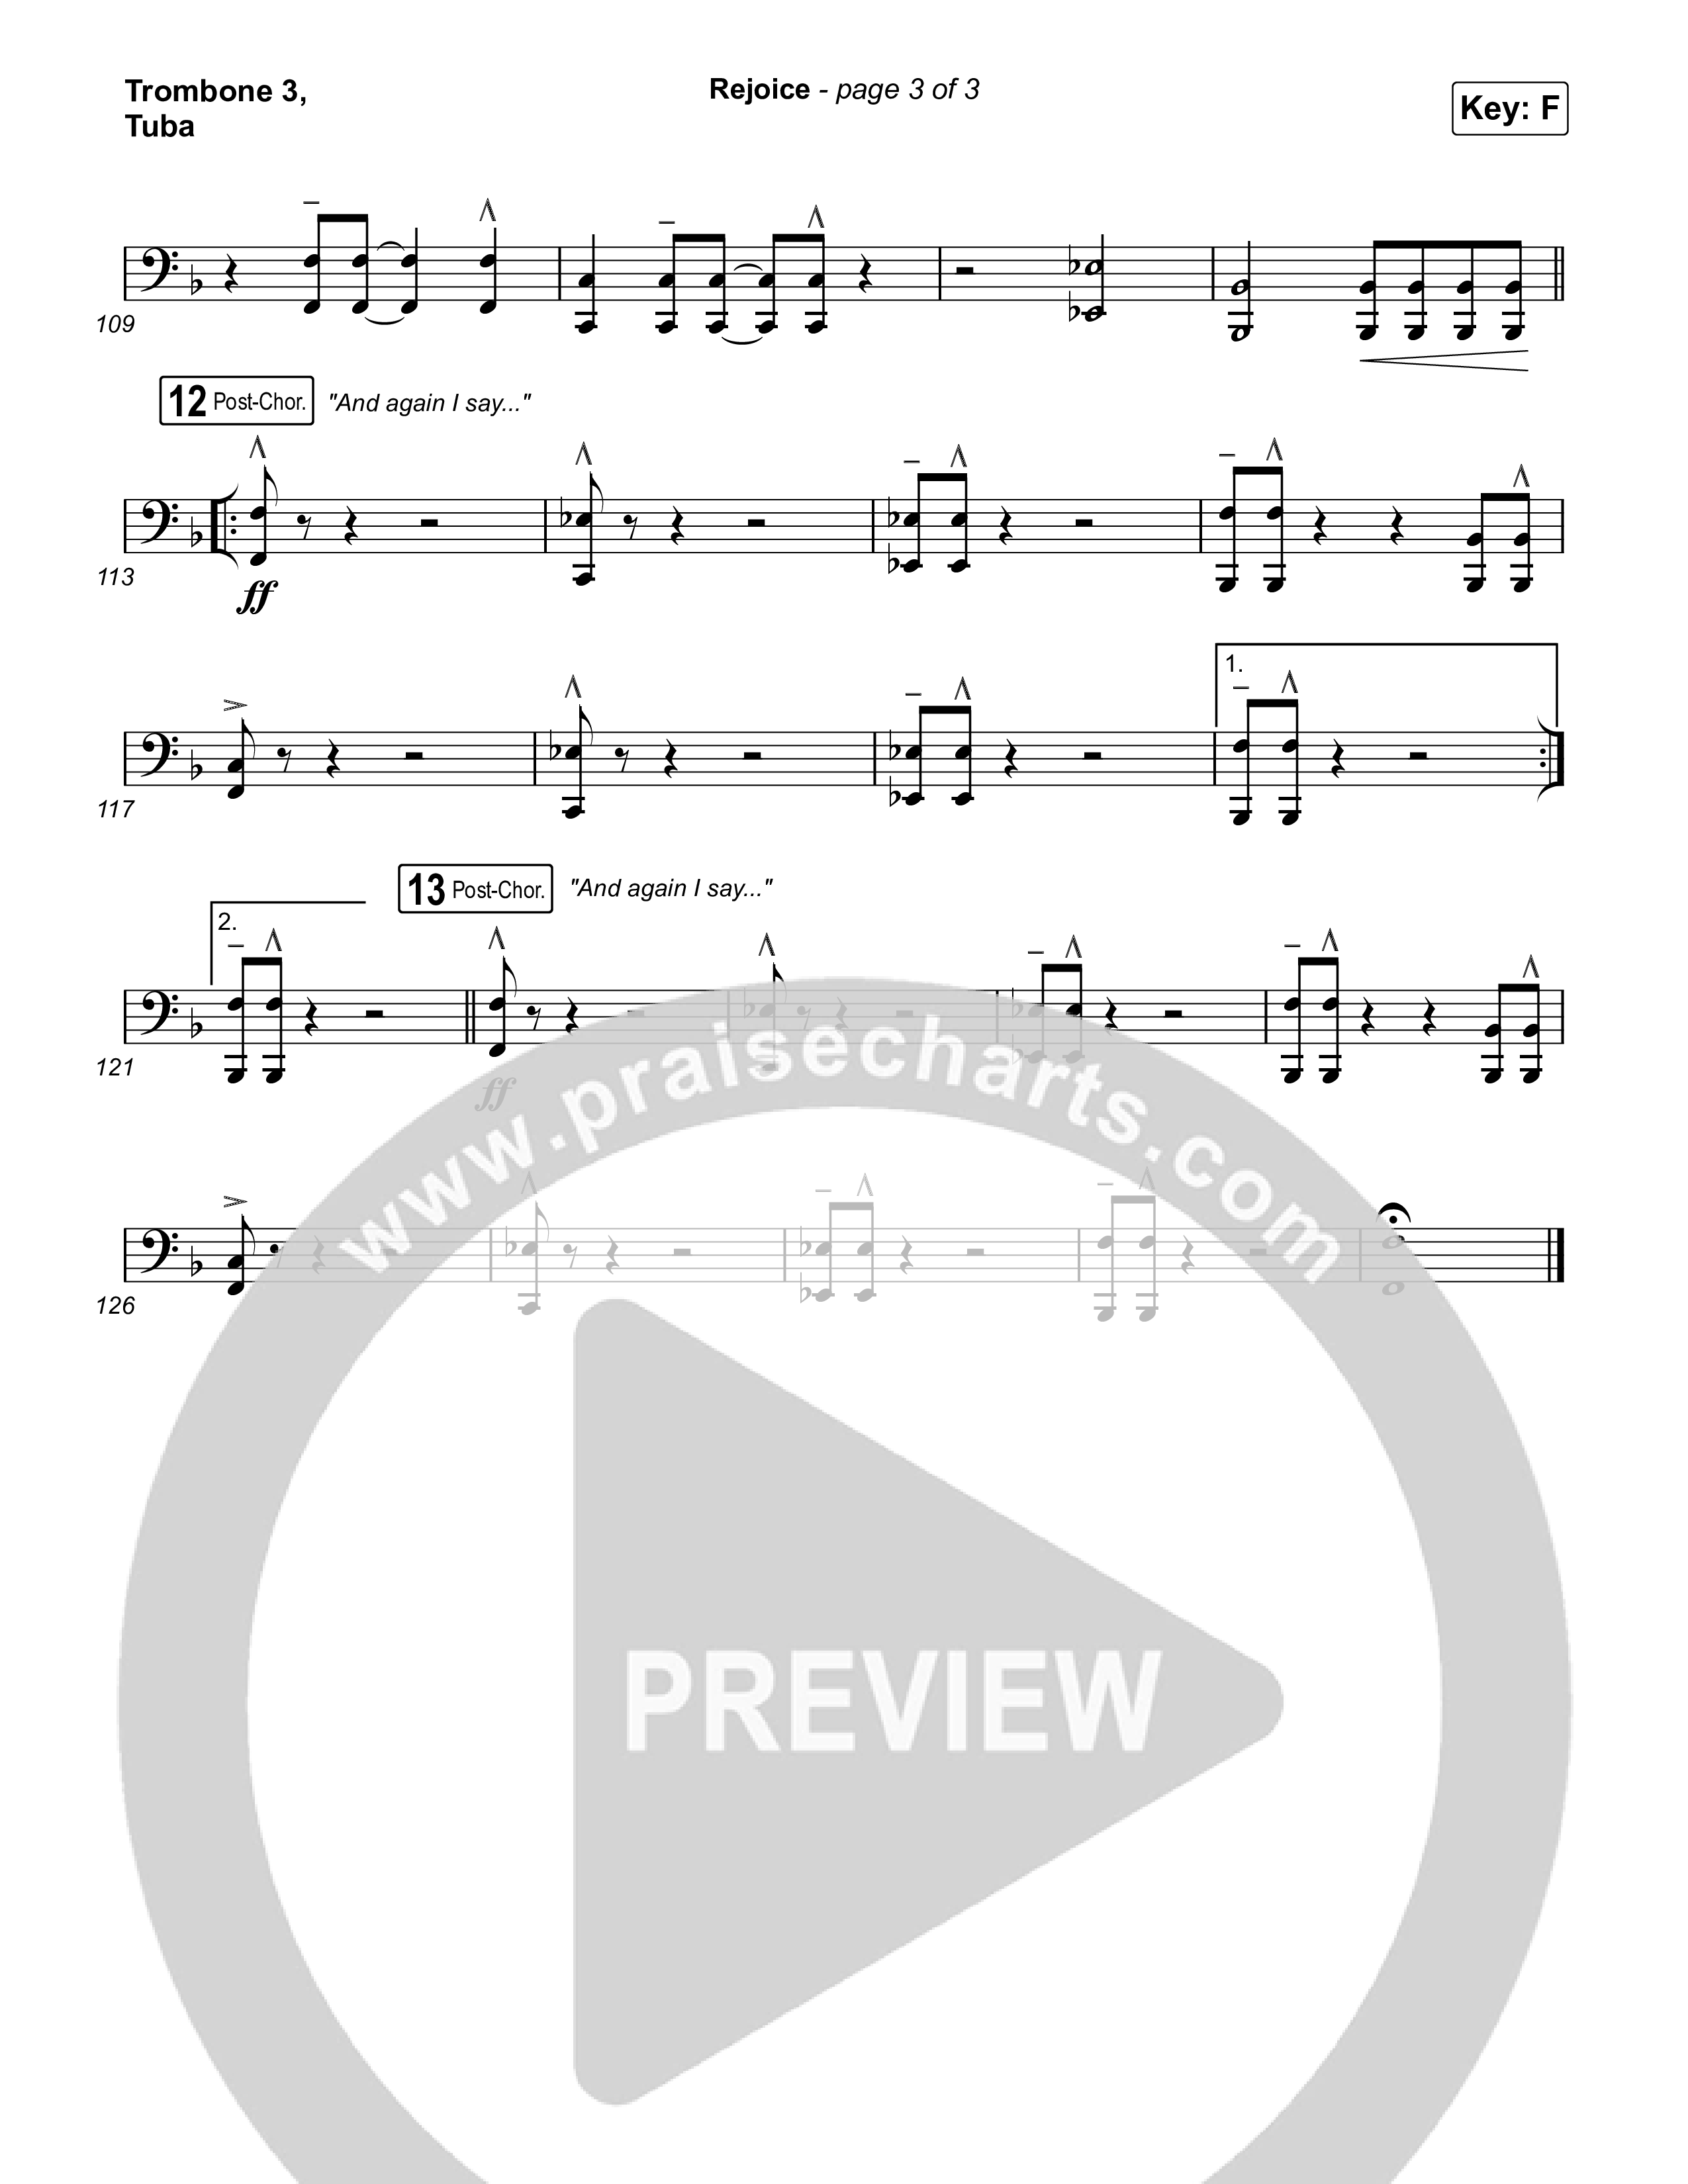 Rejoice Trombone 3/Tuba (Charity Gayle)